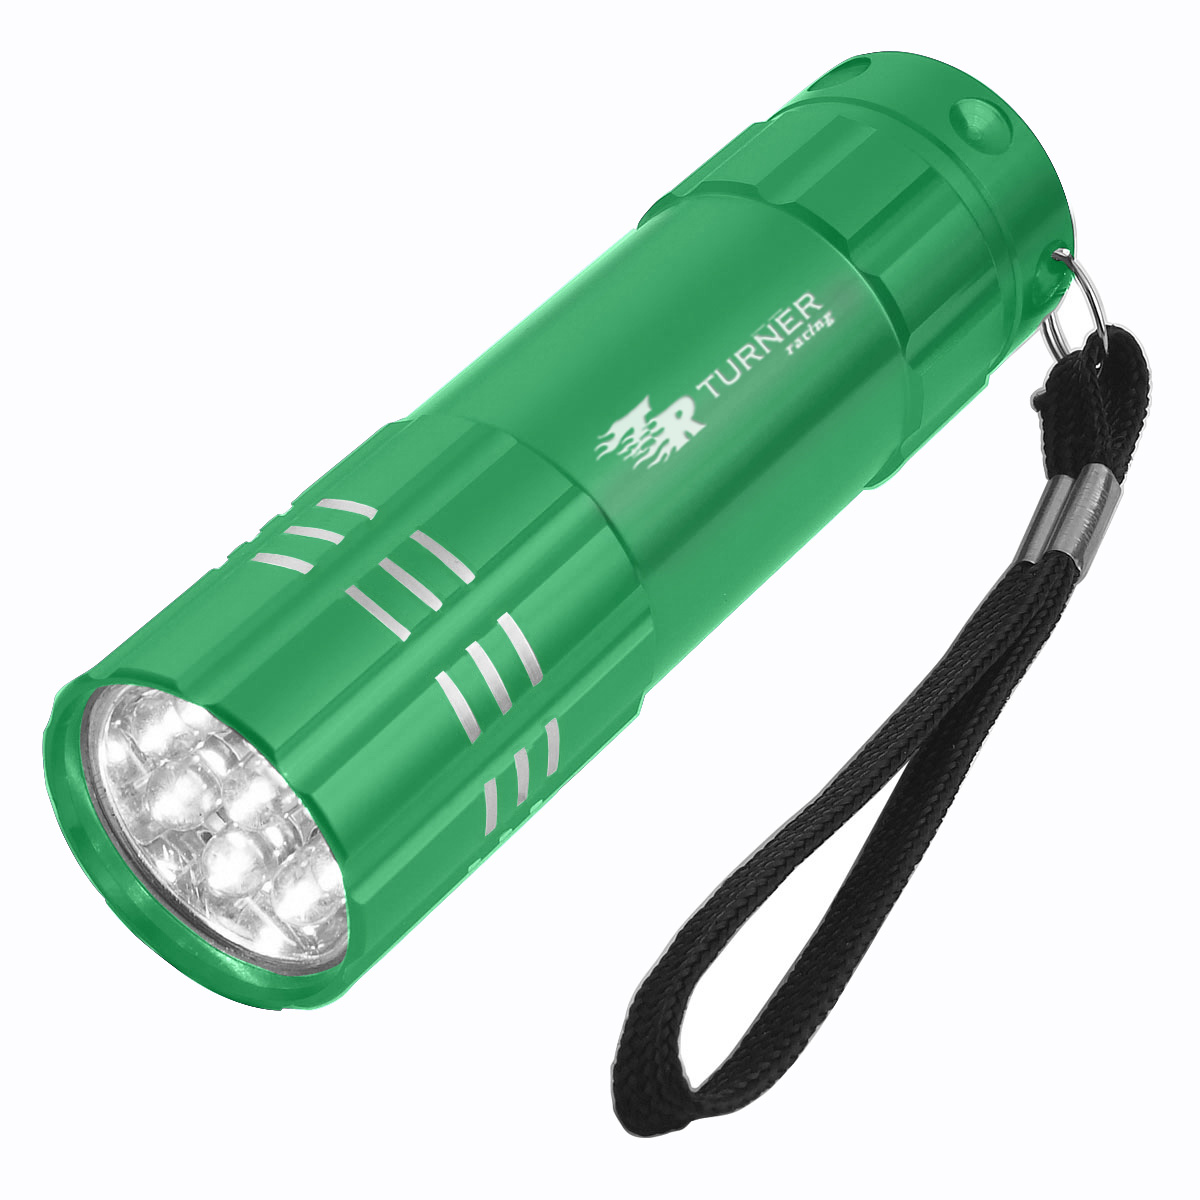 #2509 Aluminum LED Flashlight With Strap - Hit Promotional Products